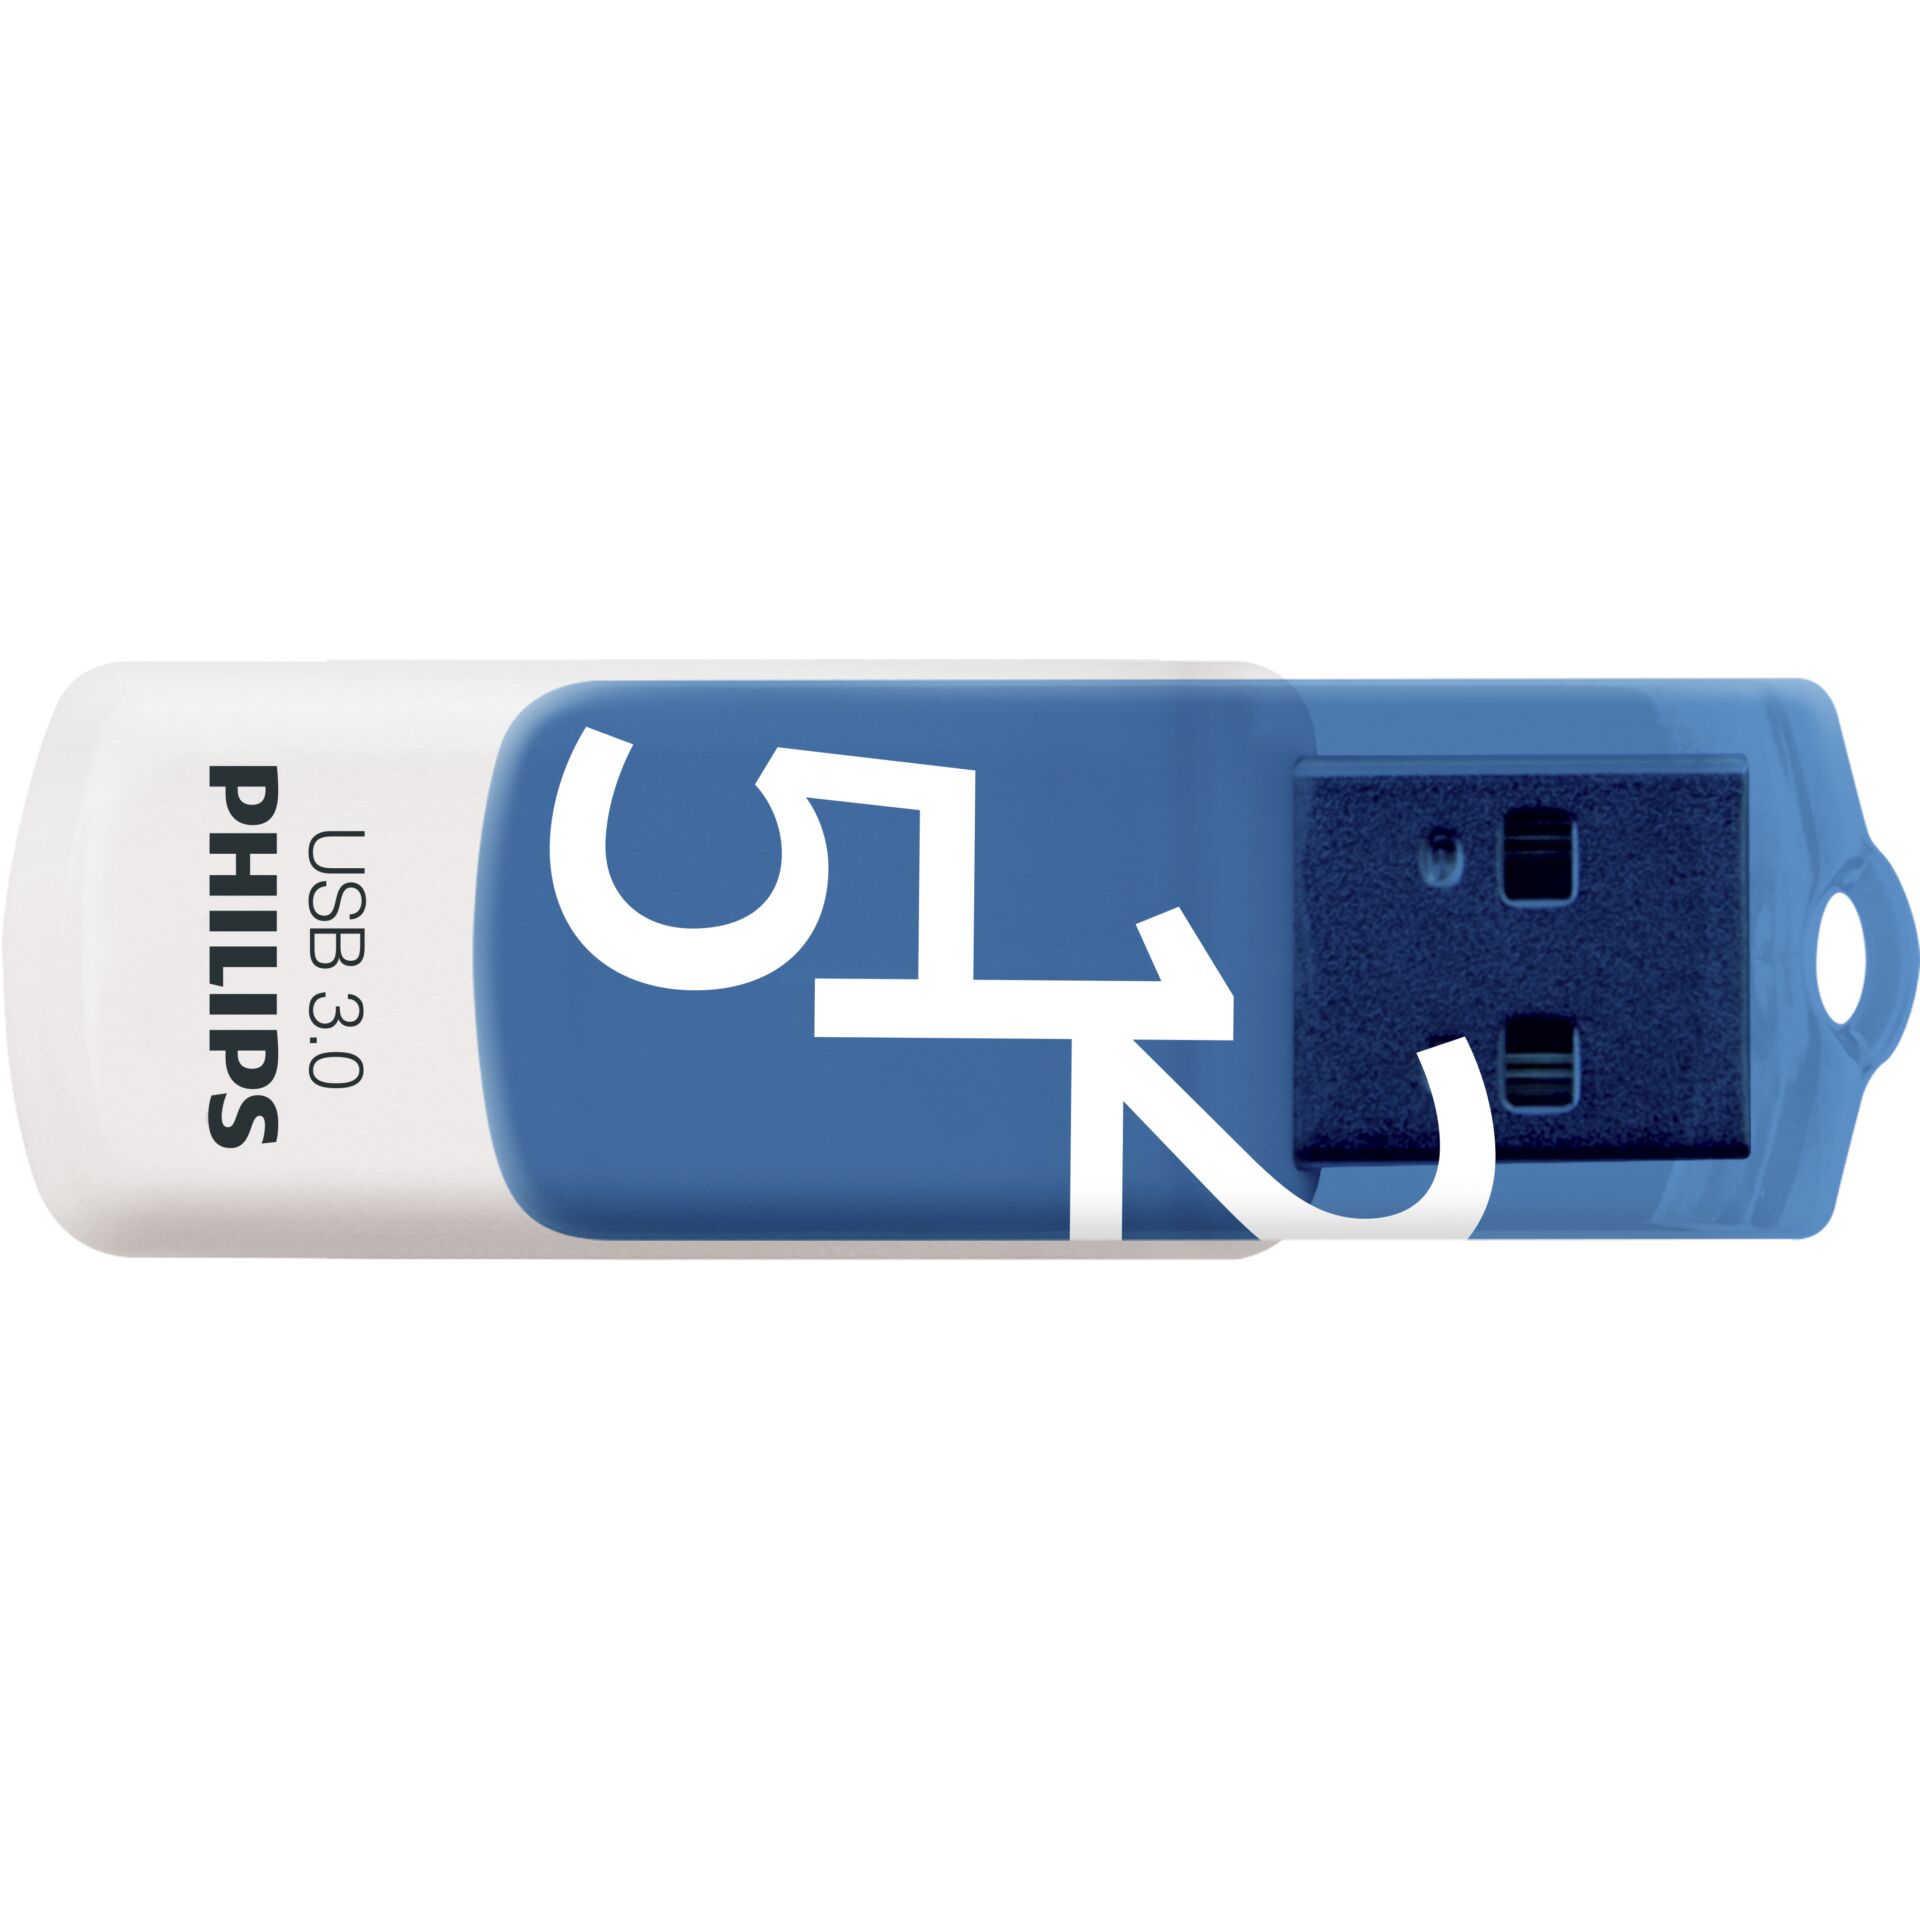 512 GB Philips Vivid blau USB-Stick, USB-A 3.0 